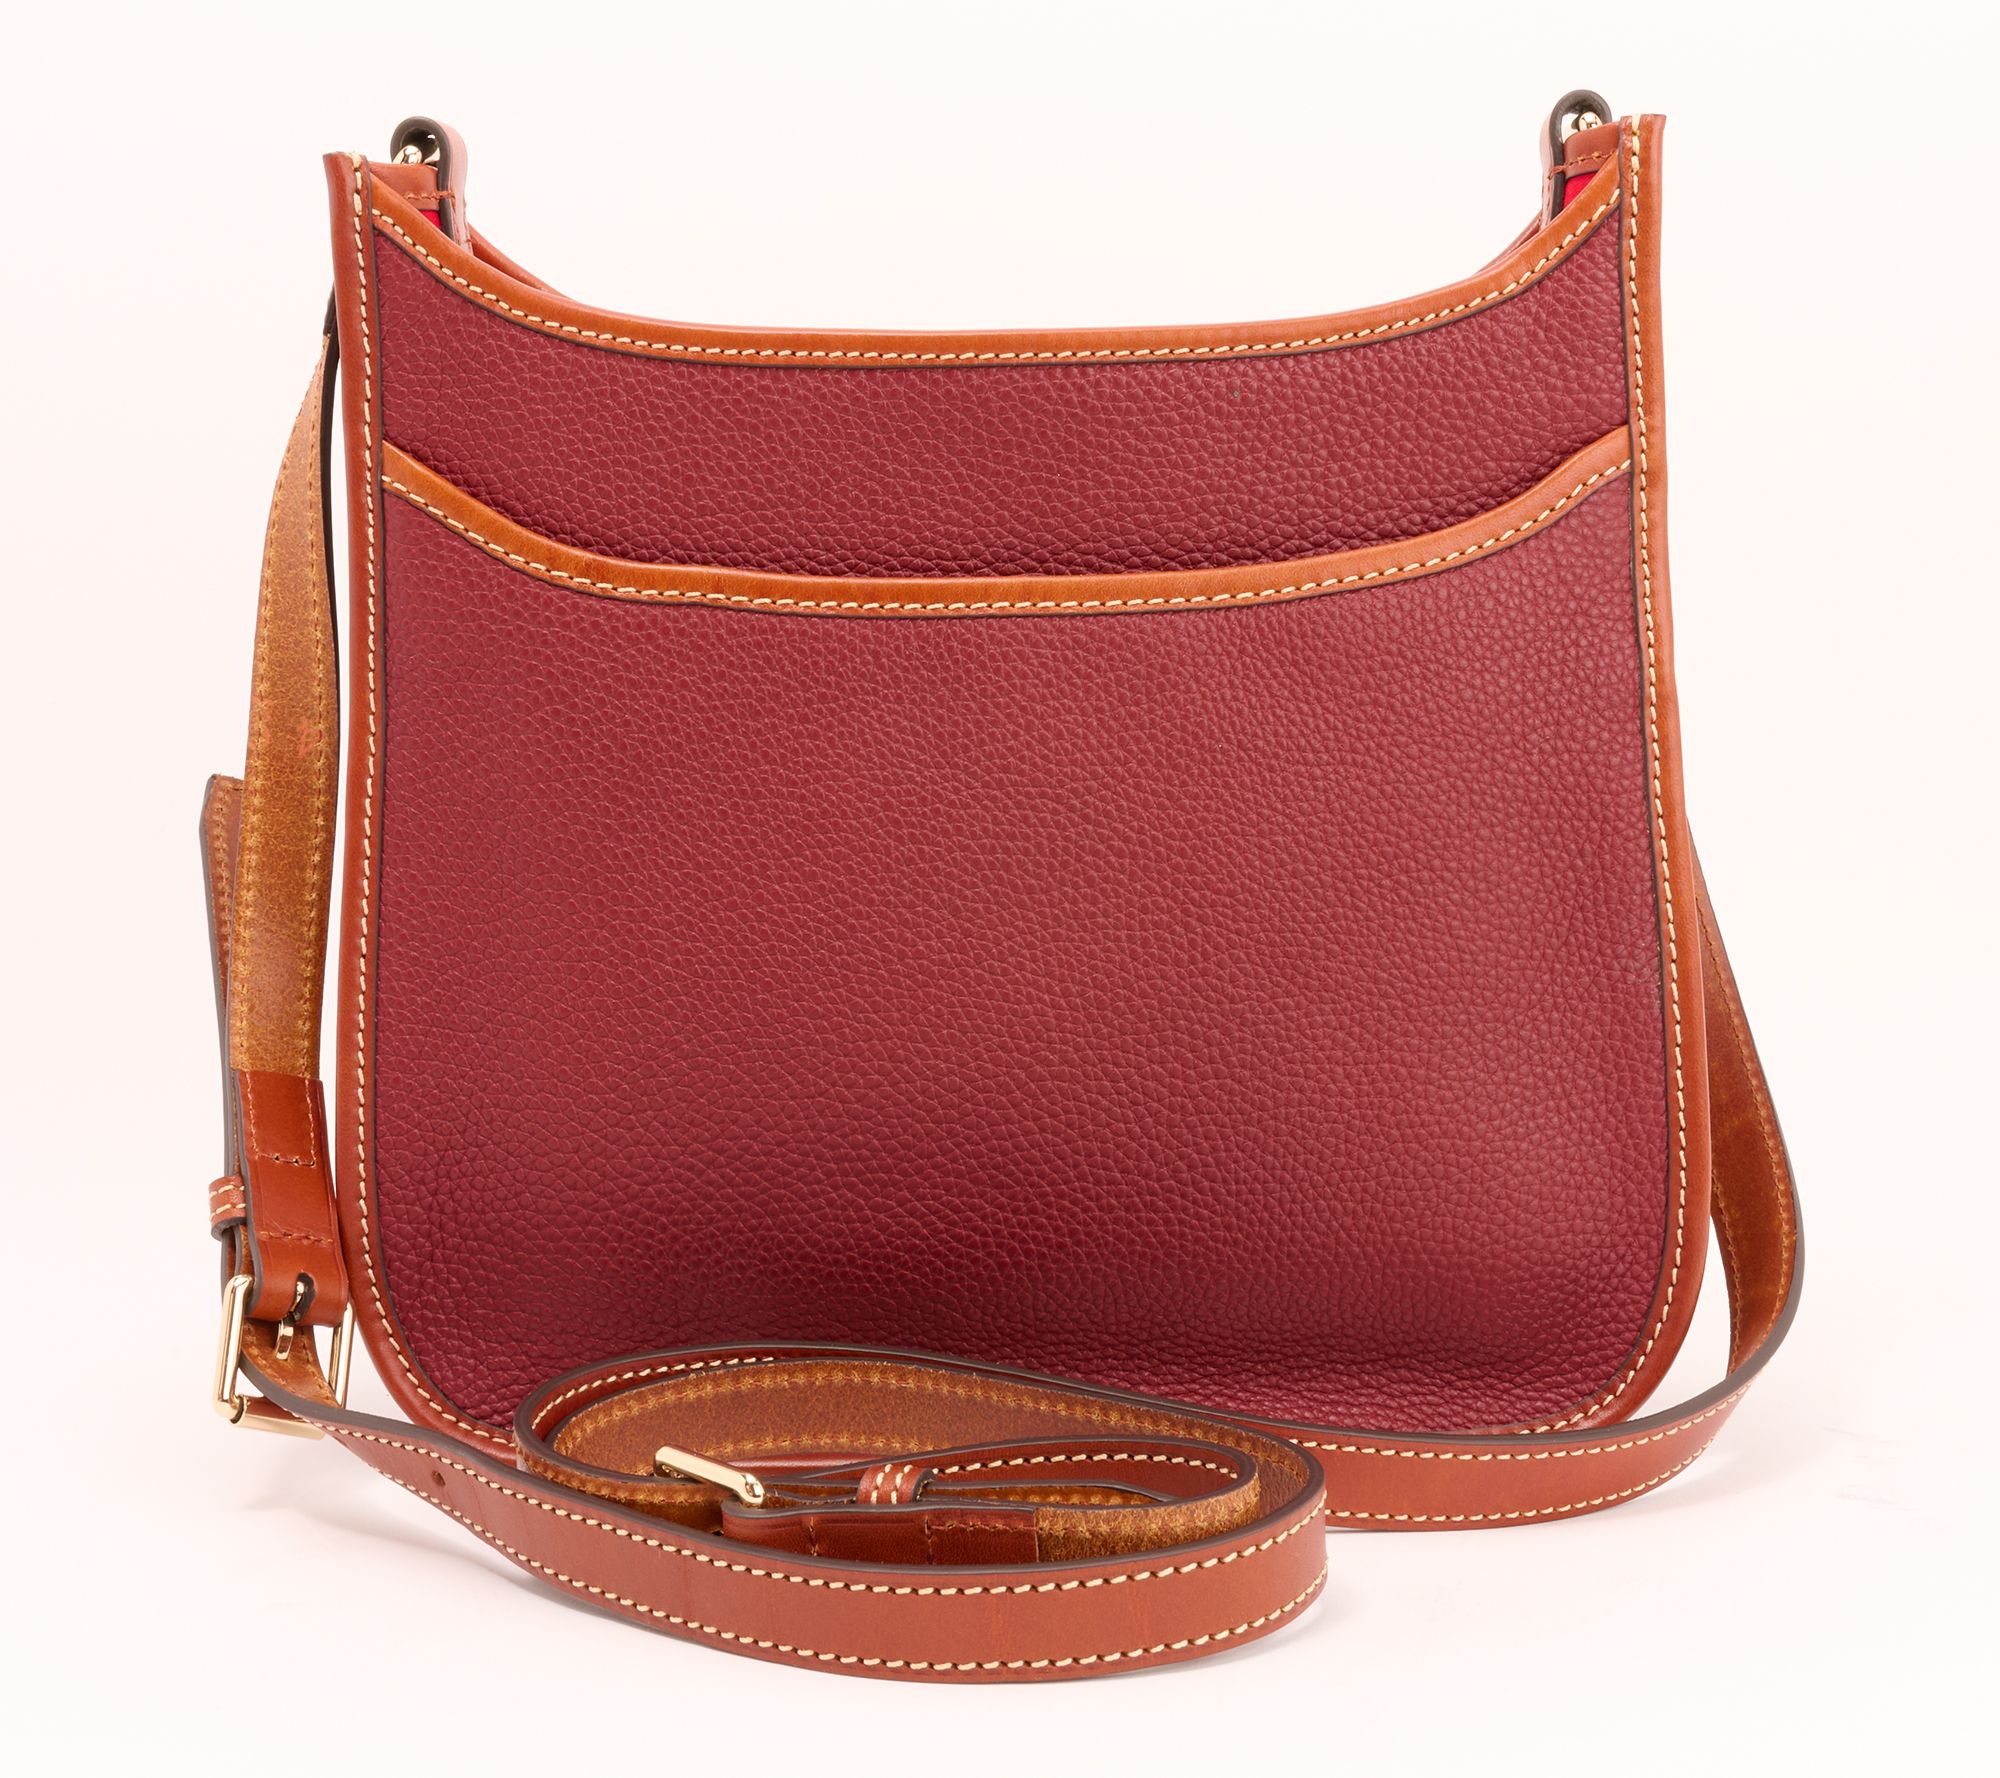 Coach Mini Pebbled leather Handbag Candy Apple Red